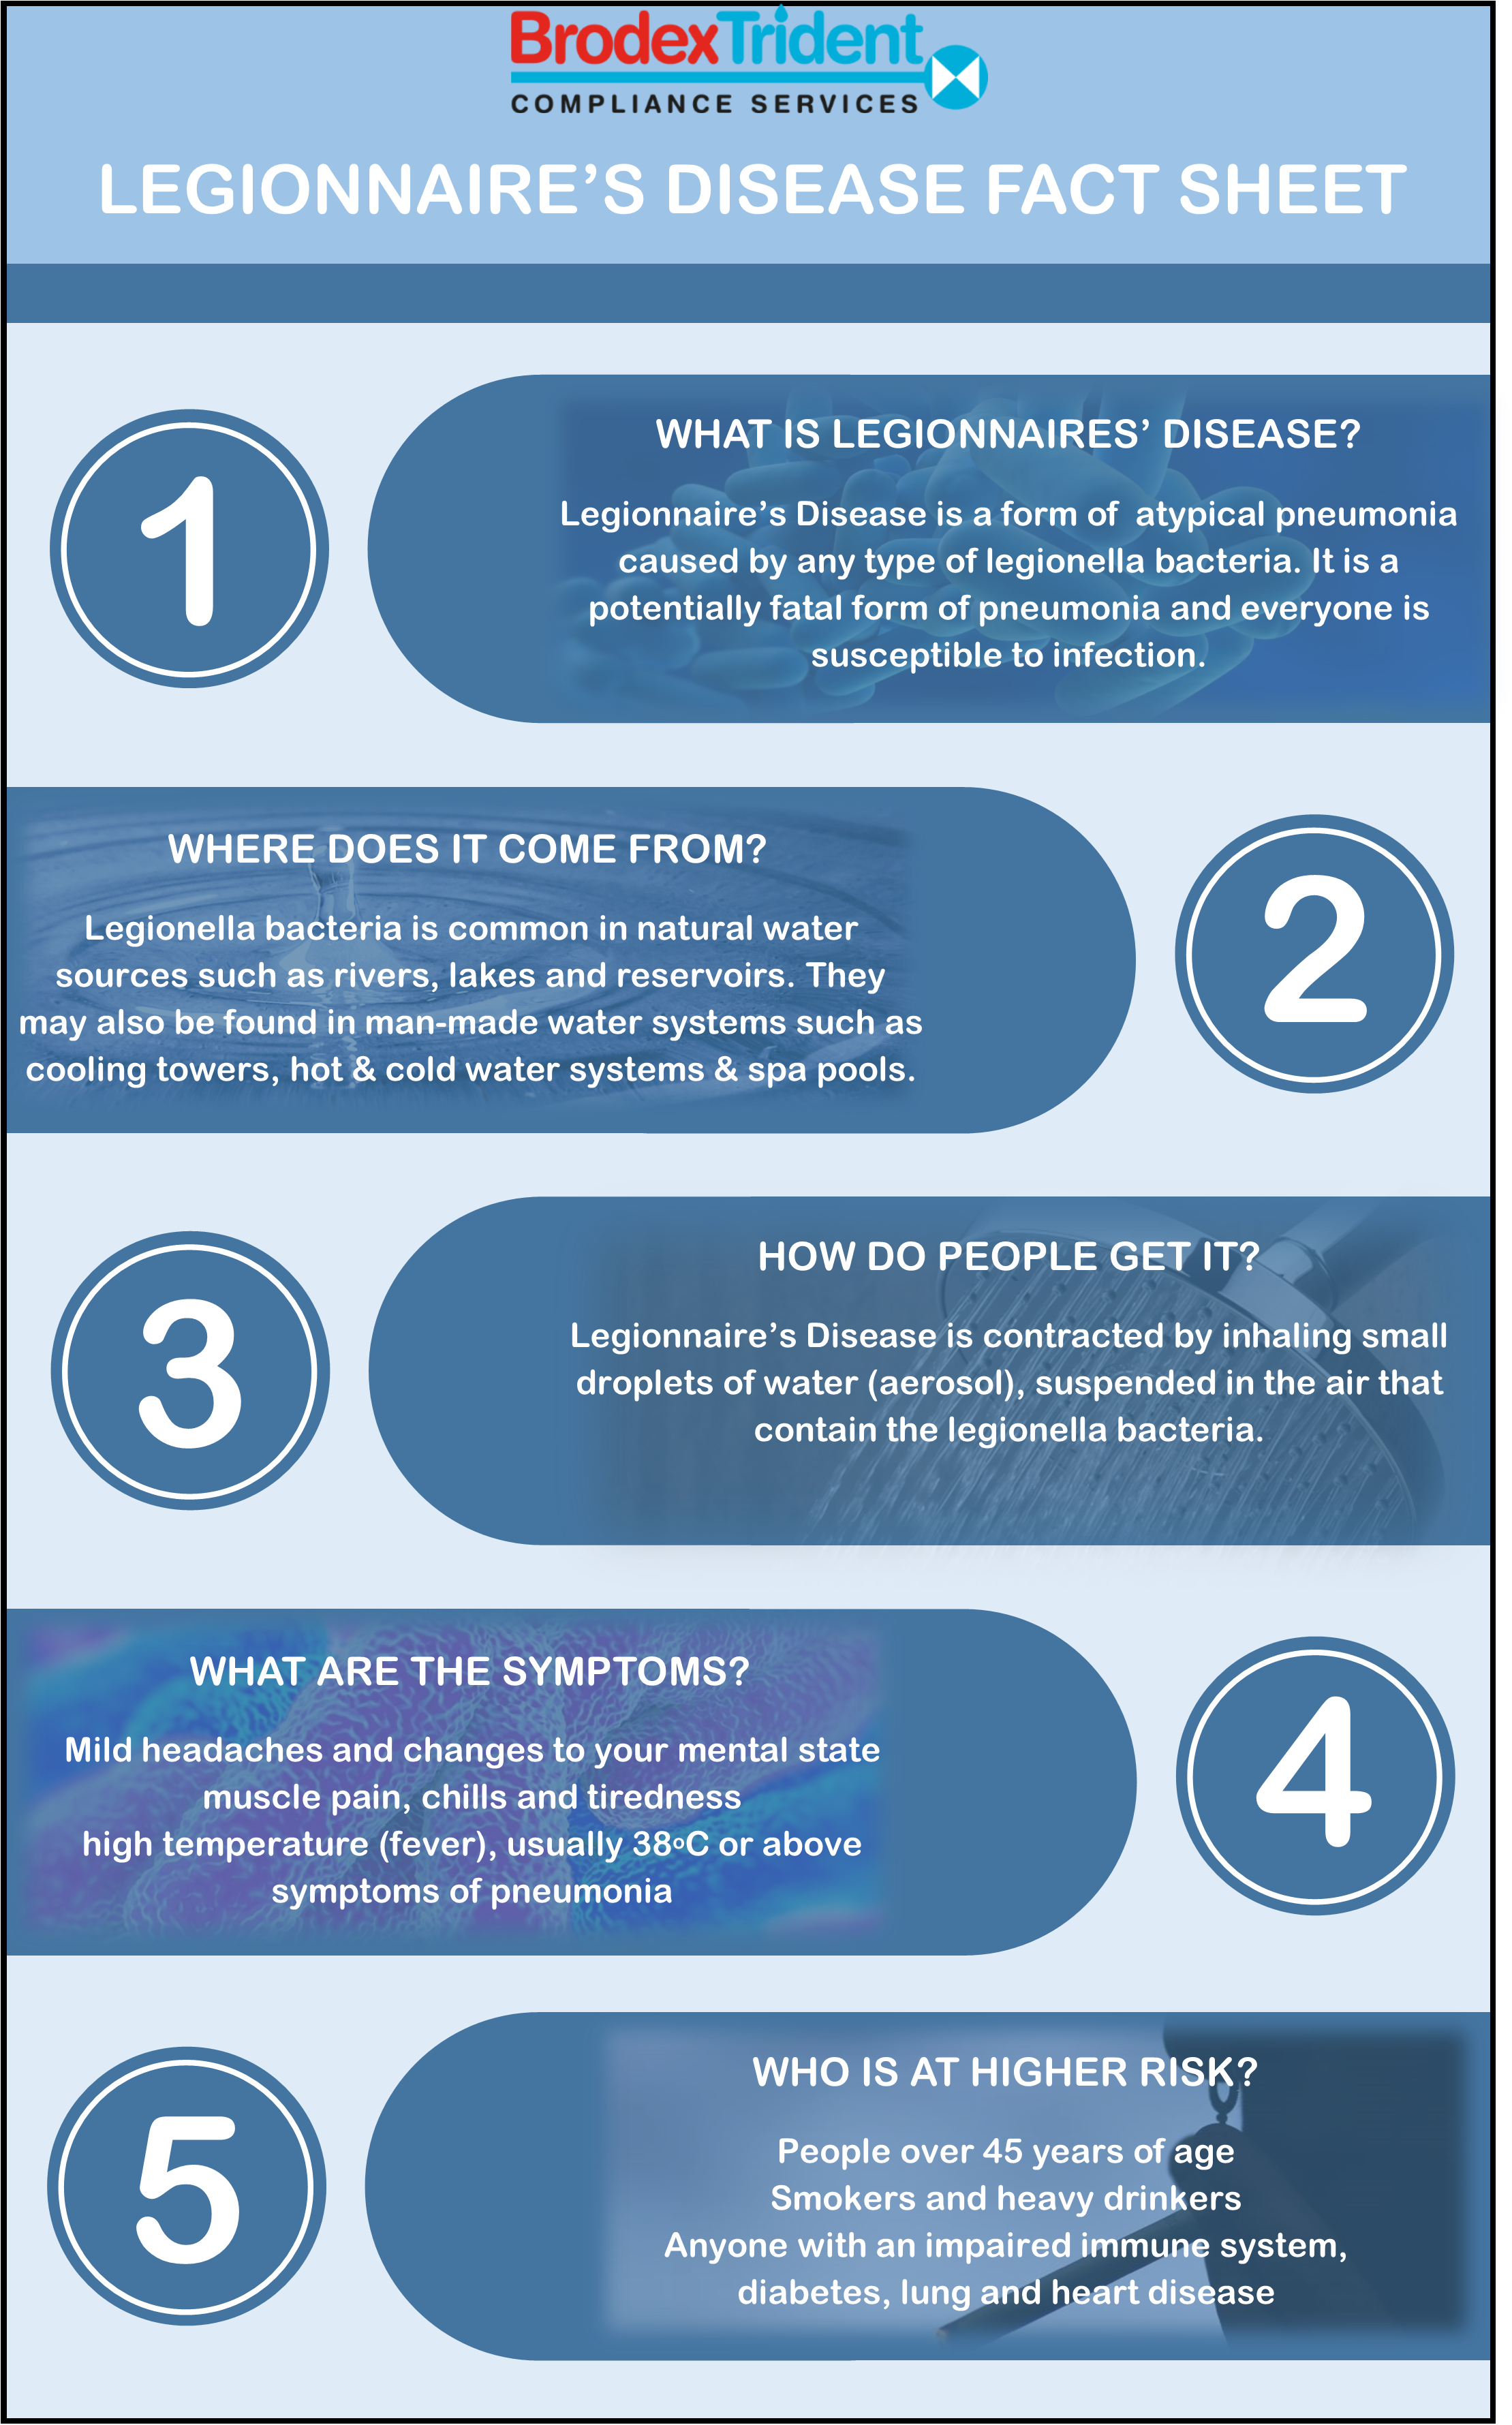 BT - Legionnaire's Disease Fact Sheet.png